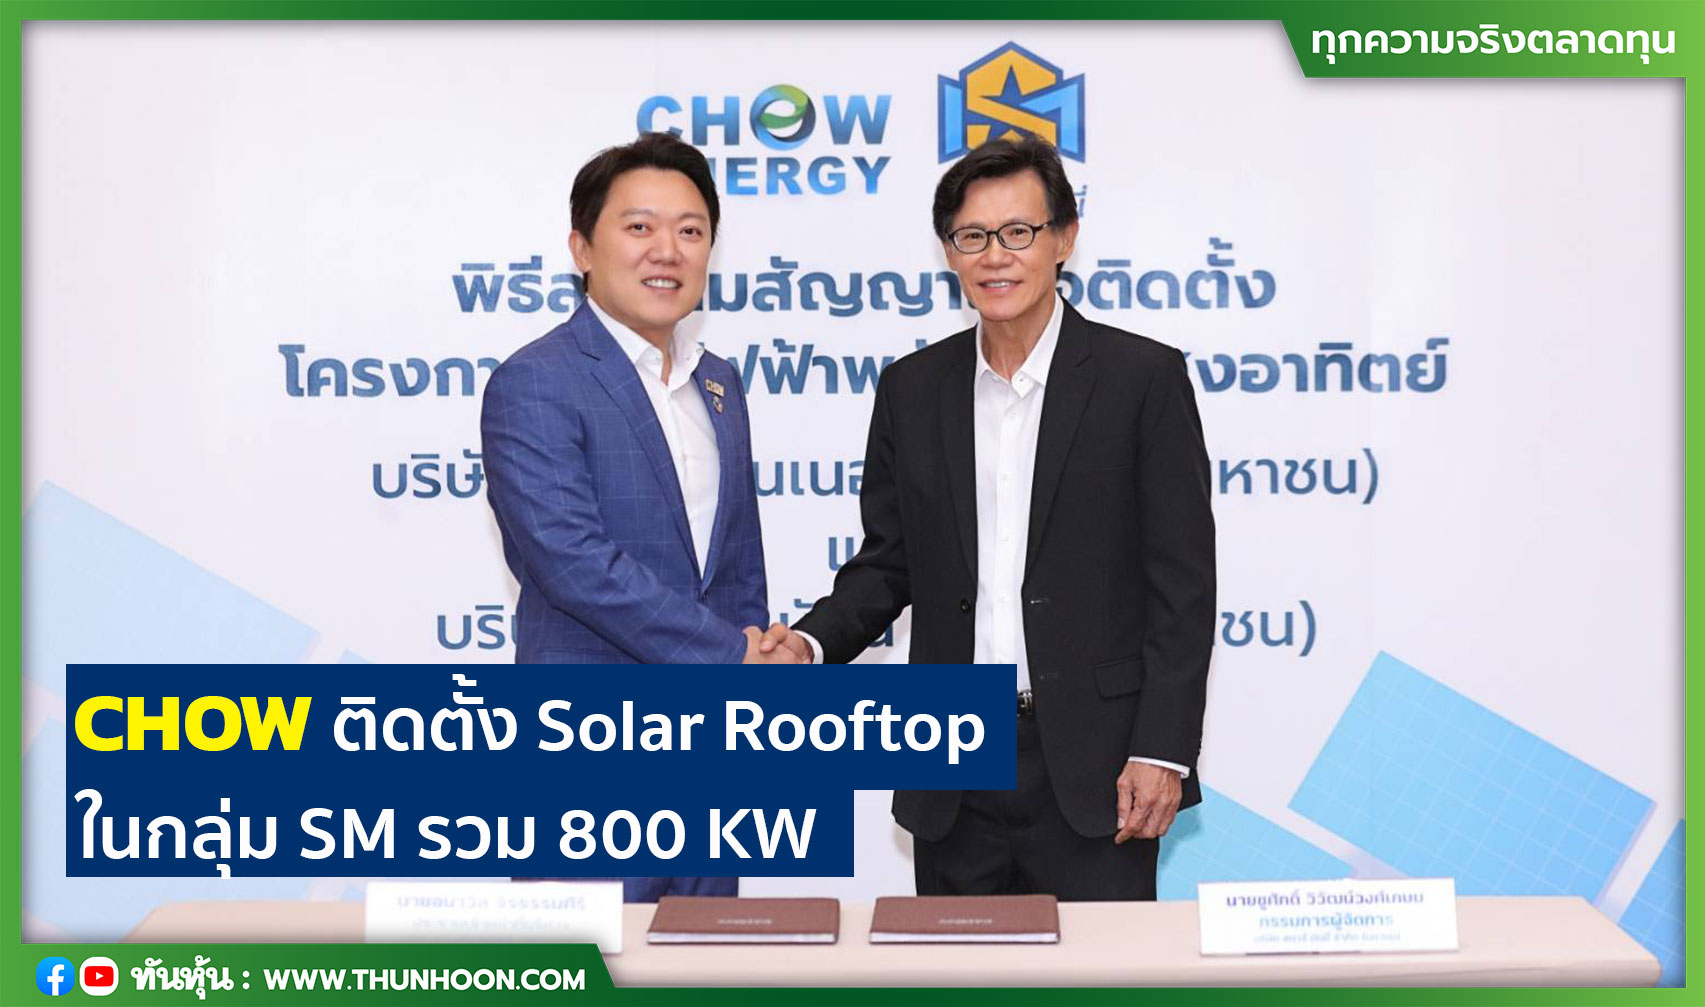 CHOW ติดตั้ง Solar Rooftop ในกลุ่ม SM รวม 800 KW, ร่วมมือทางธุรกิจ 